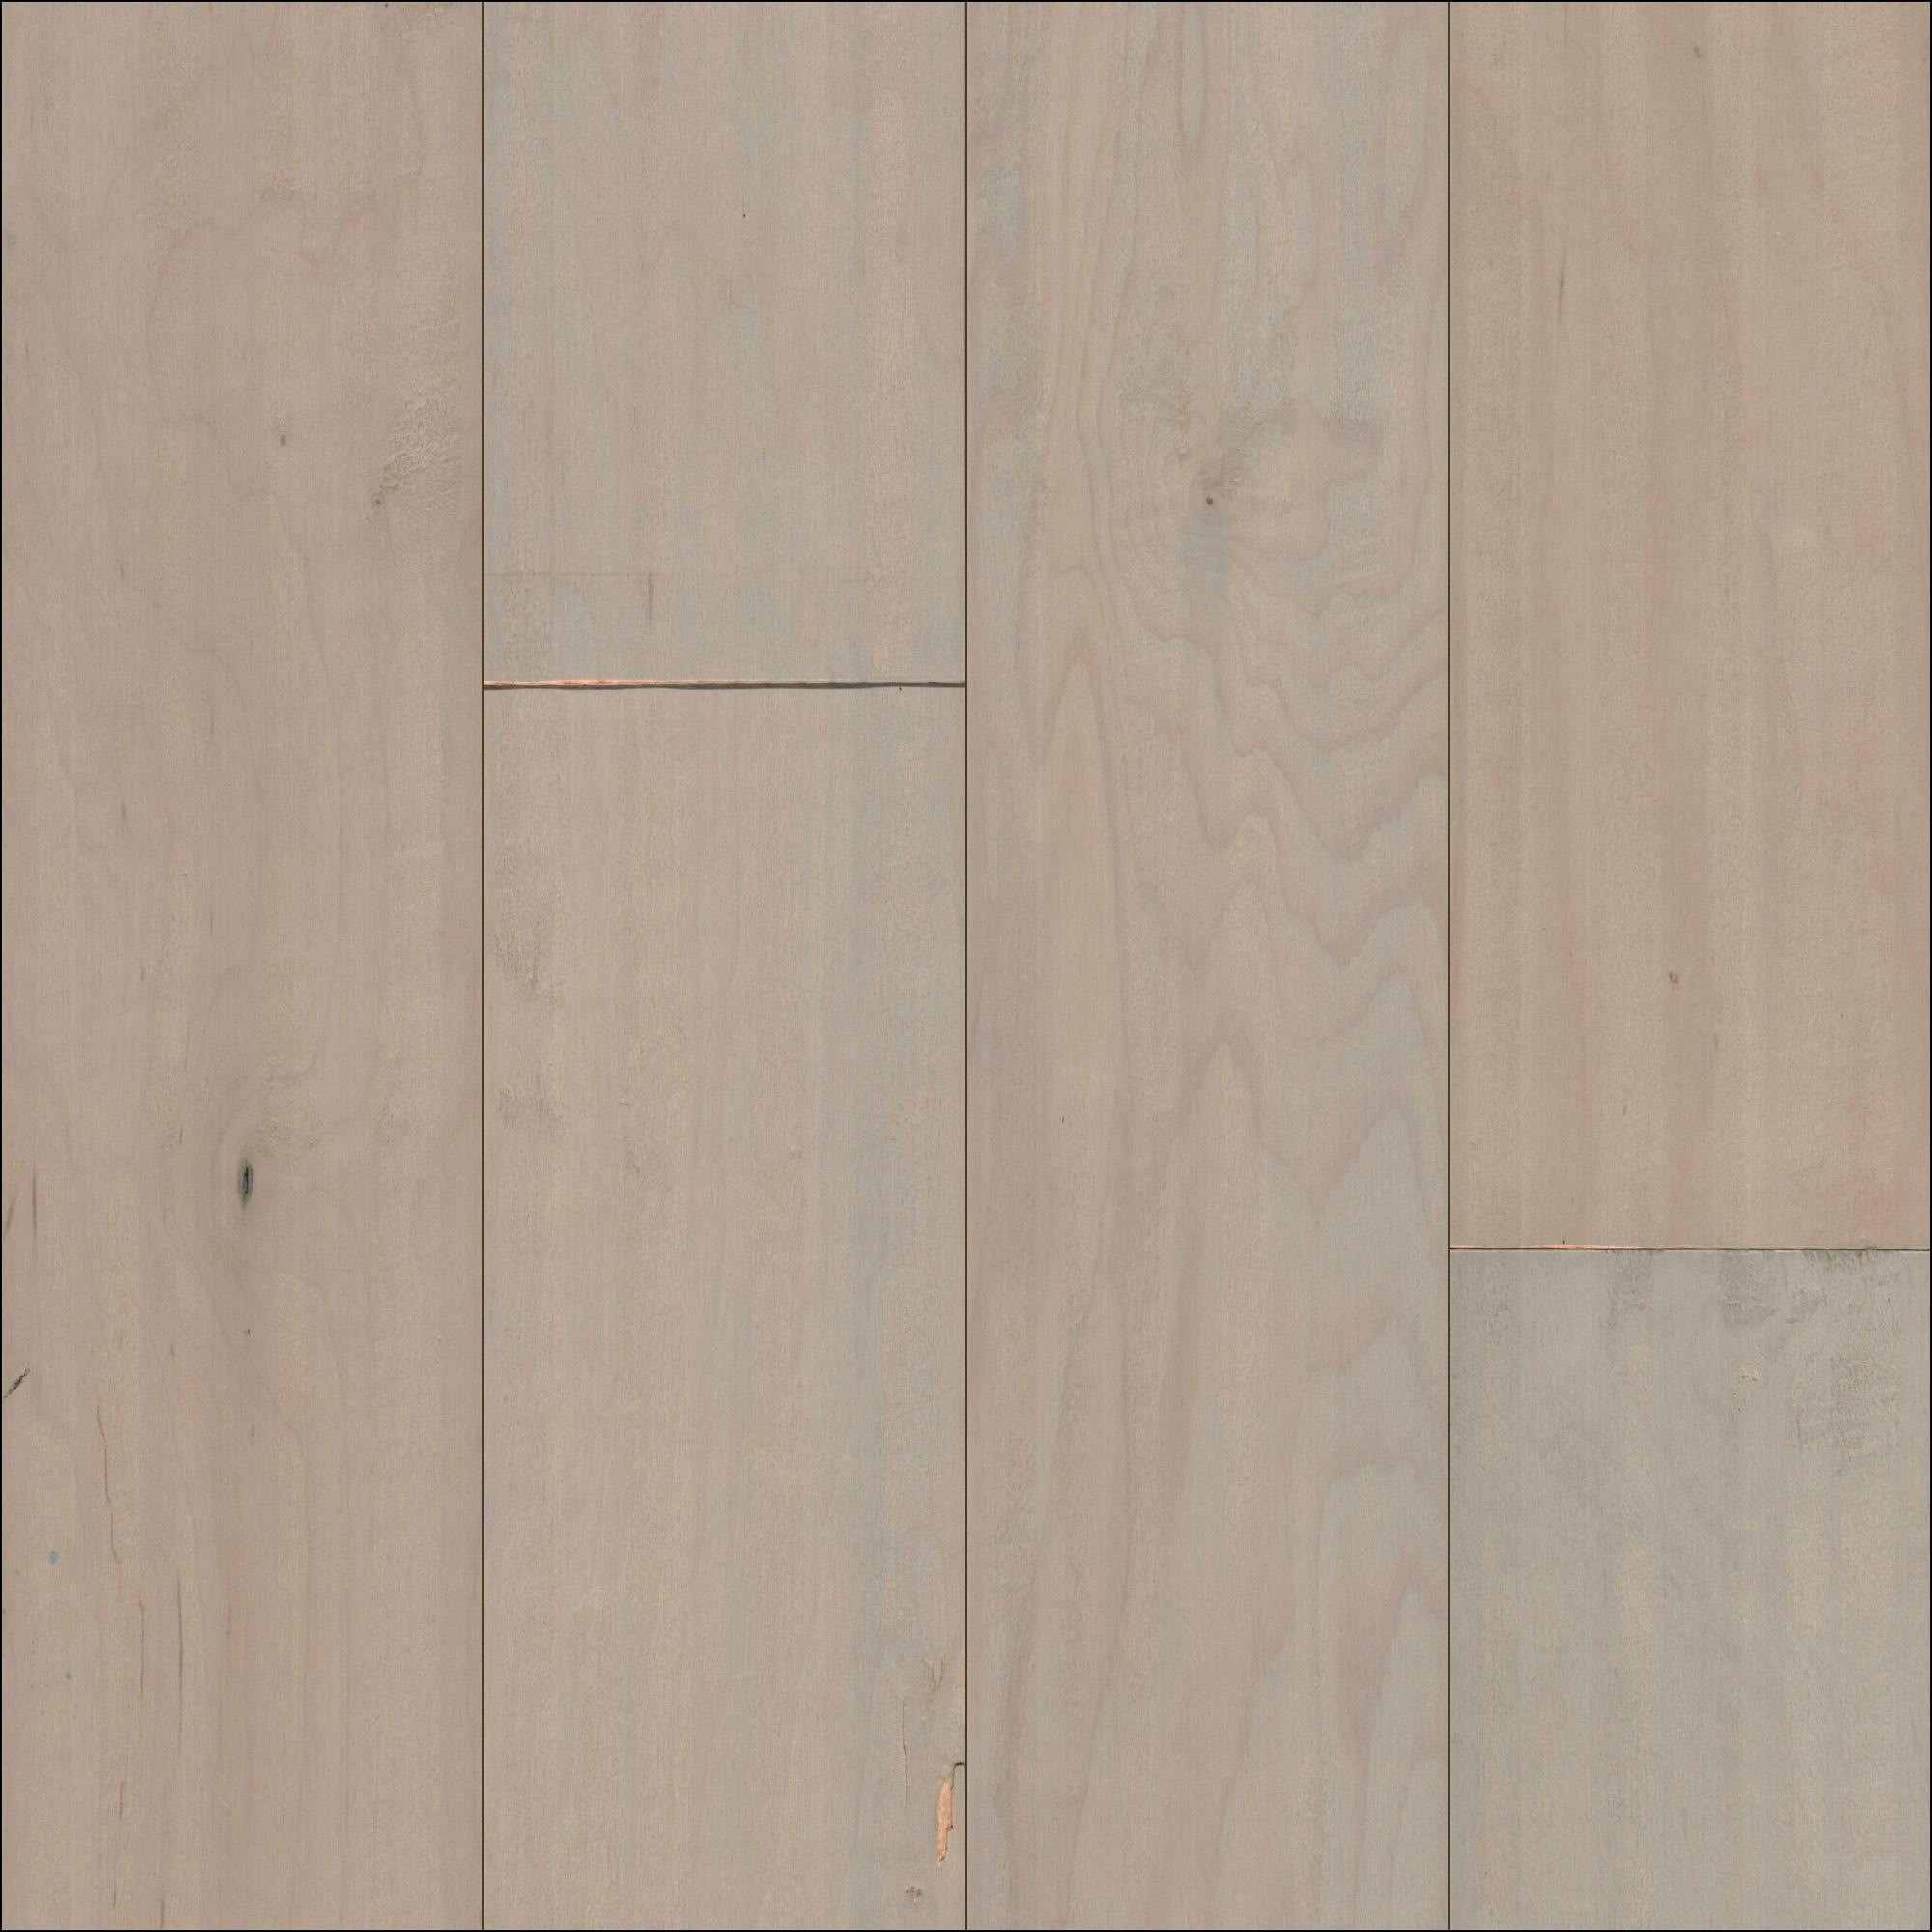 18 Wonderful Harold's Hardwood Flooring Newington Ct 2024 free download haroldamp039s hardwood flooring newington ct of scratch resistant flooring ideas within scratch resistant